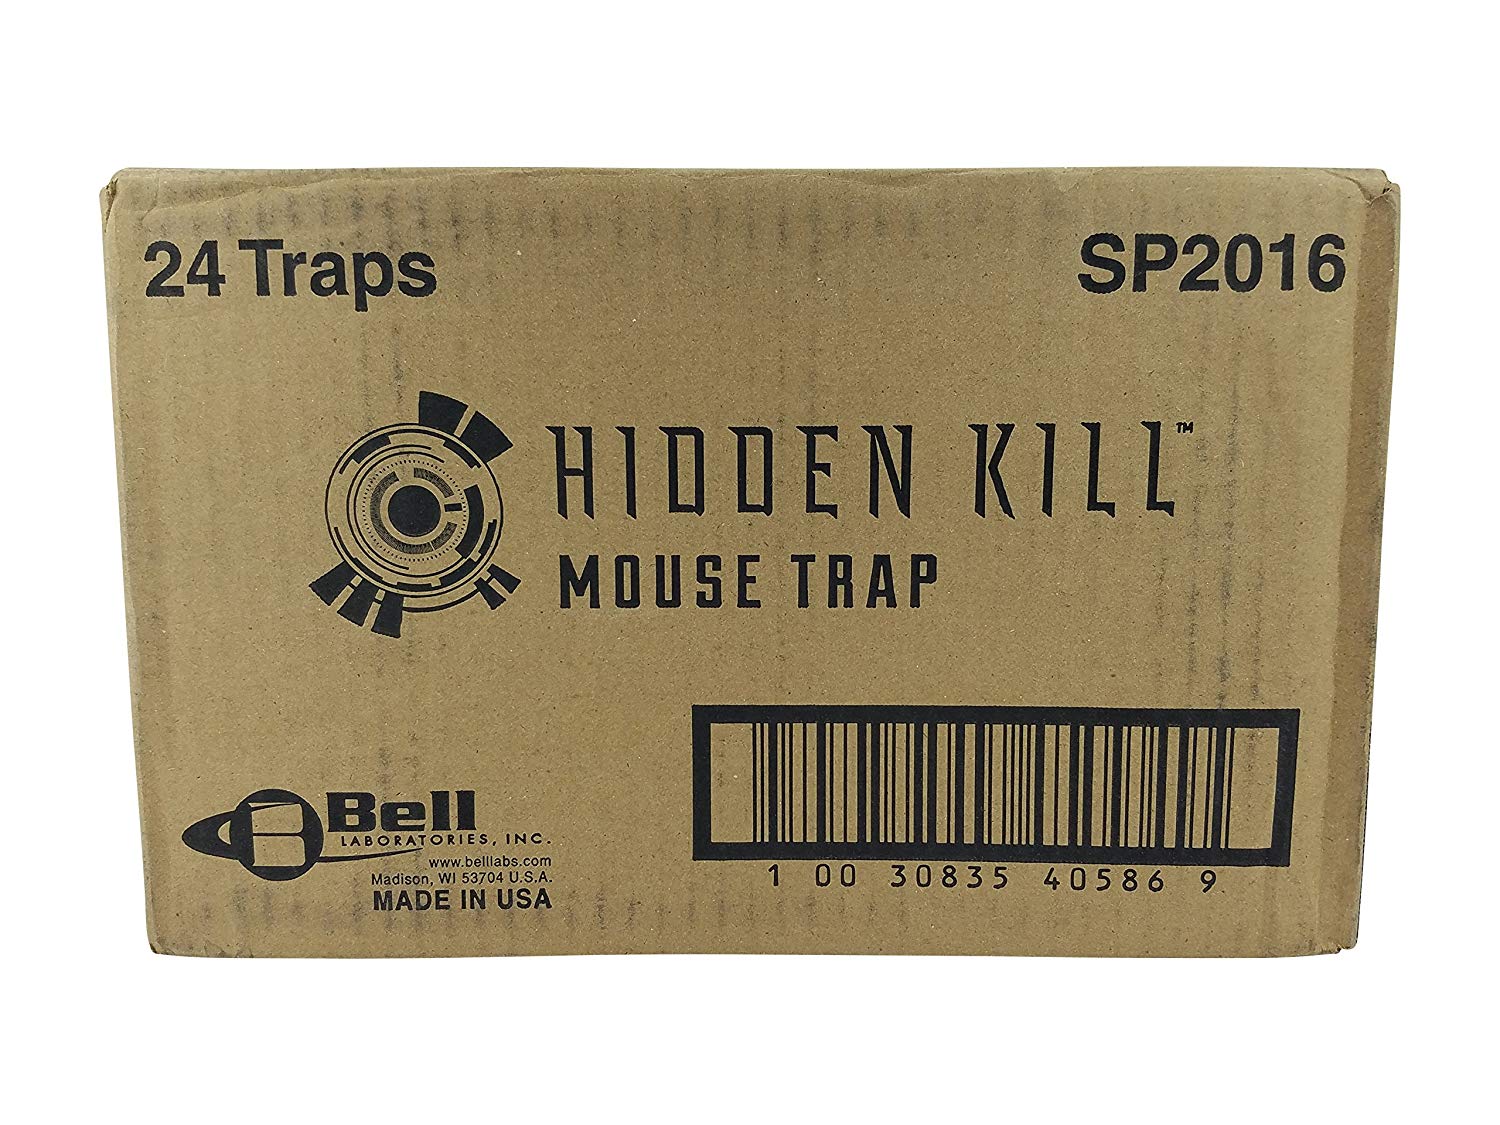 TRAPPER Mini-Rex Mouse Trap, Wildlife Control Supplies